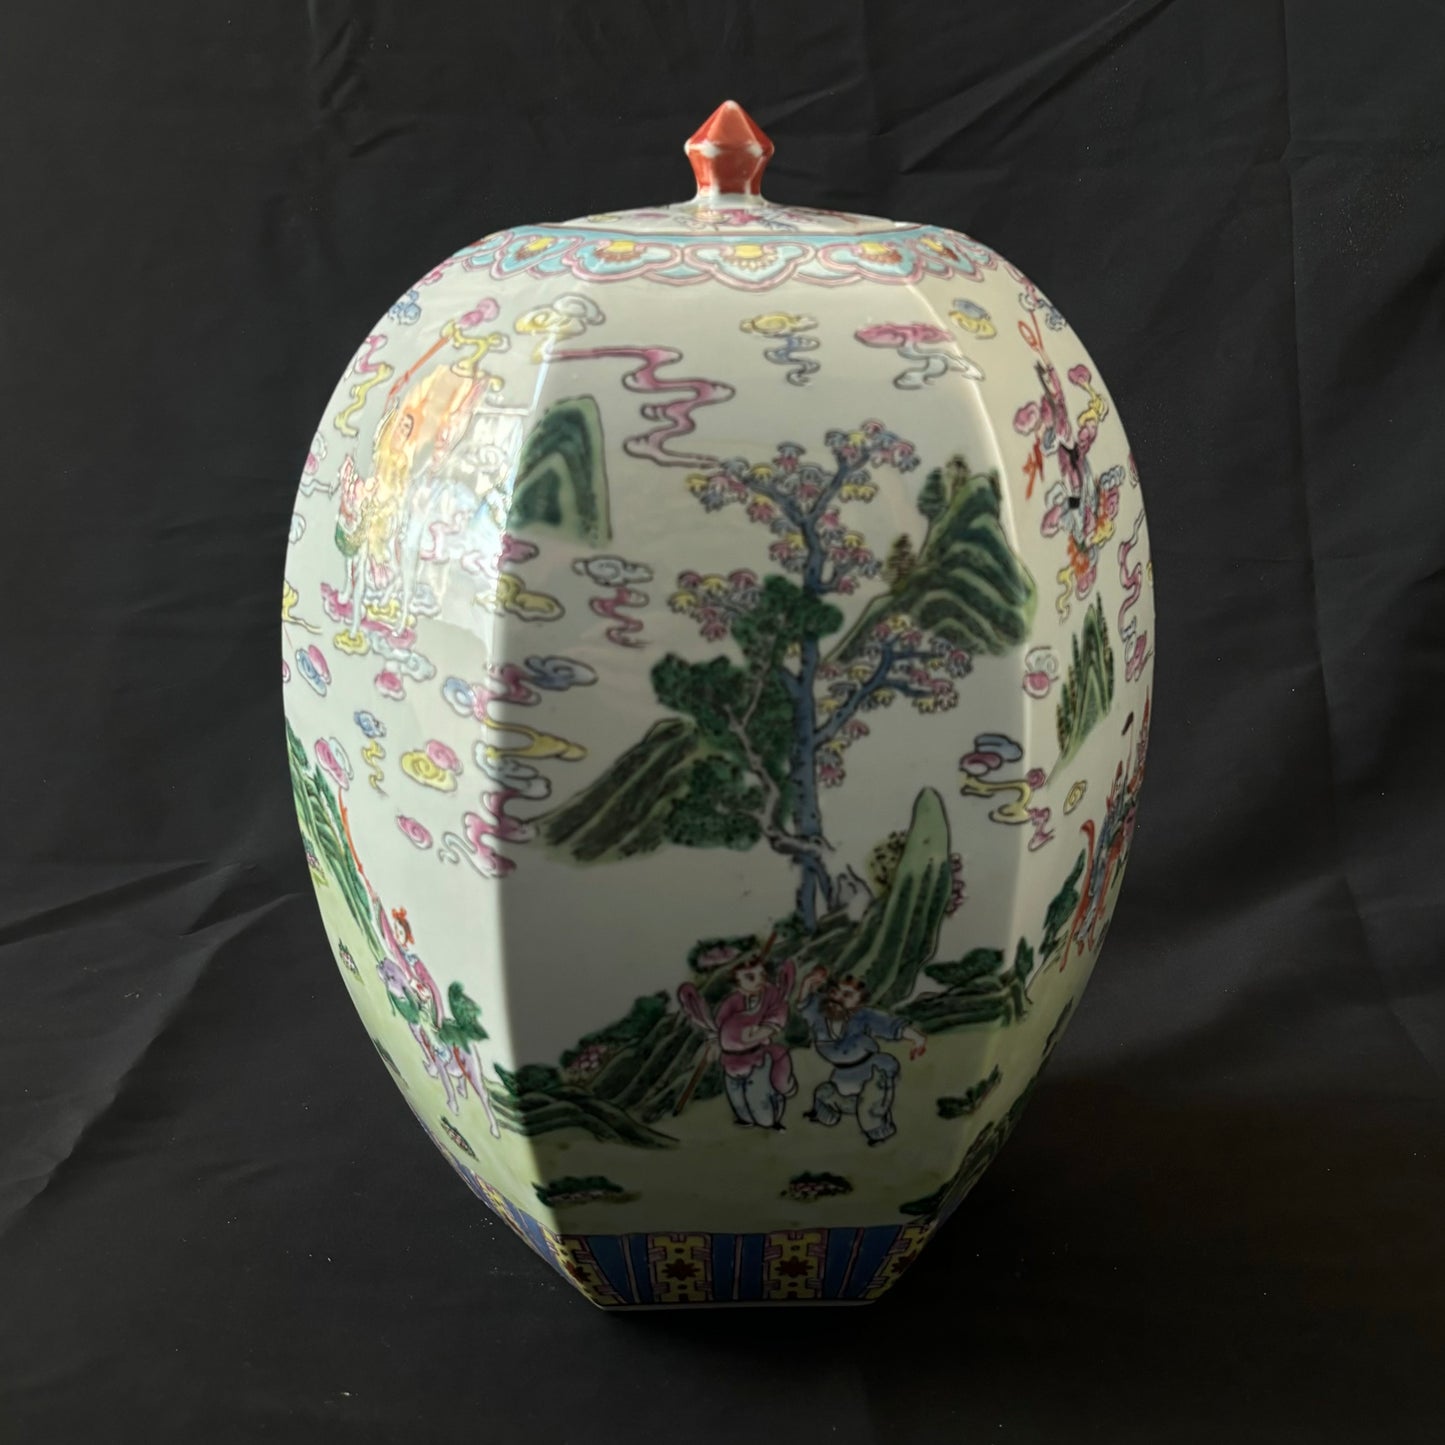 Chinese Hexagonal Decorative Vessel